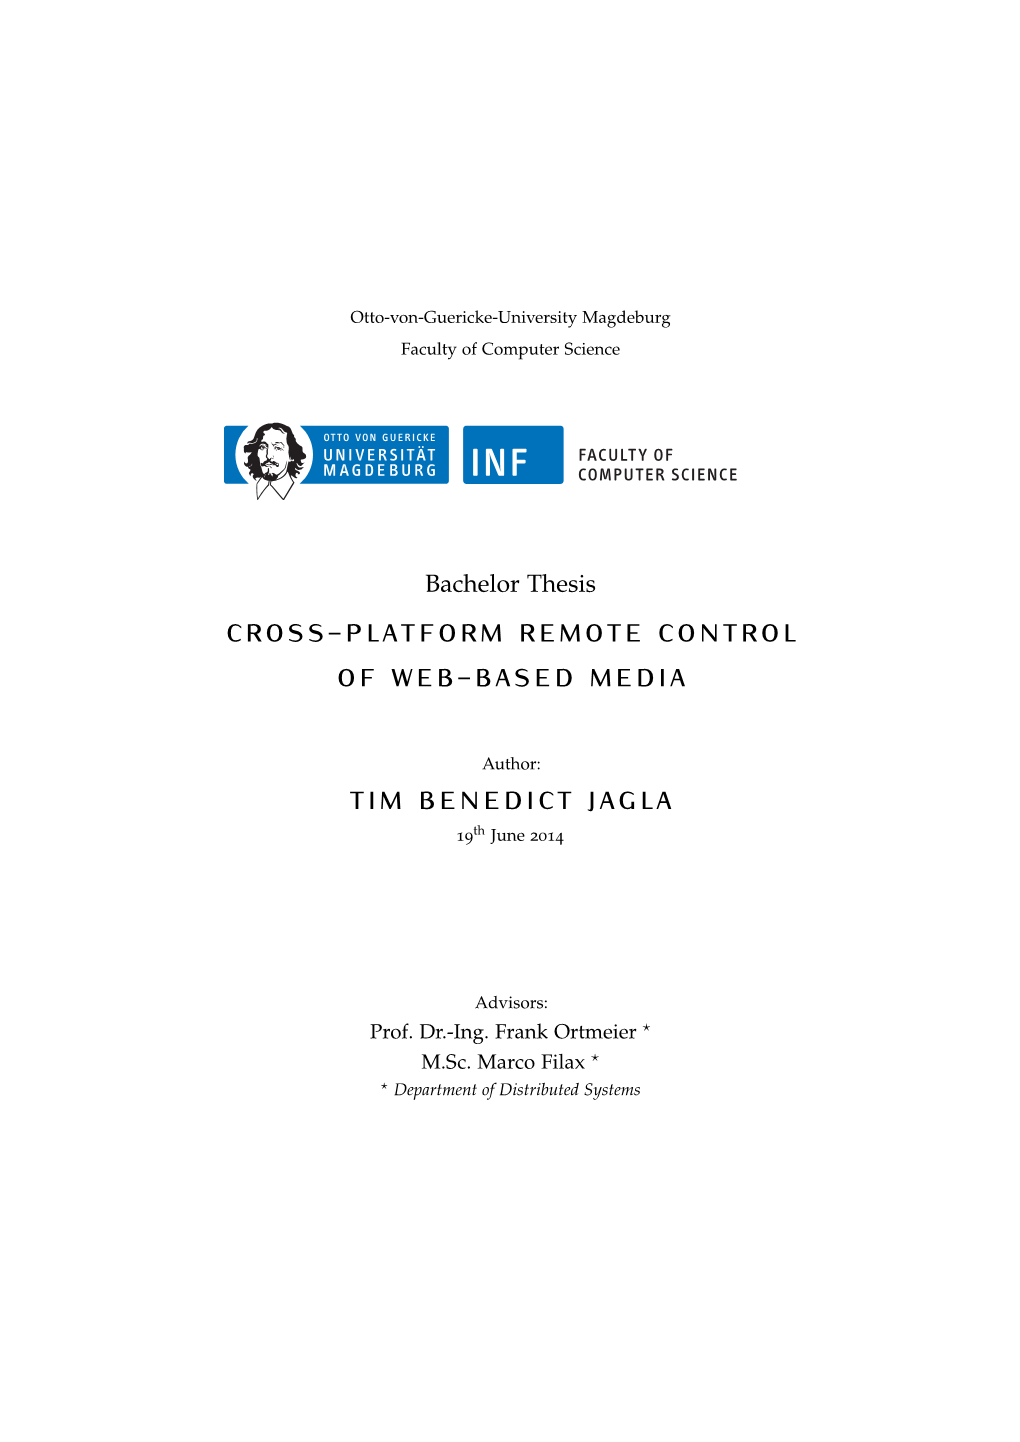 Cross-Platform Remote Control of Web-Based Media